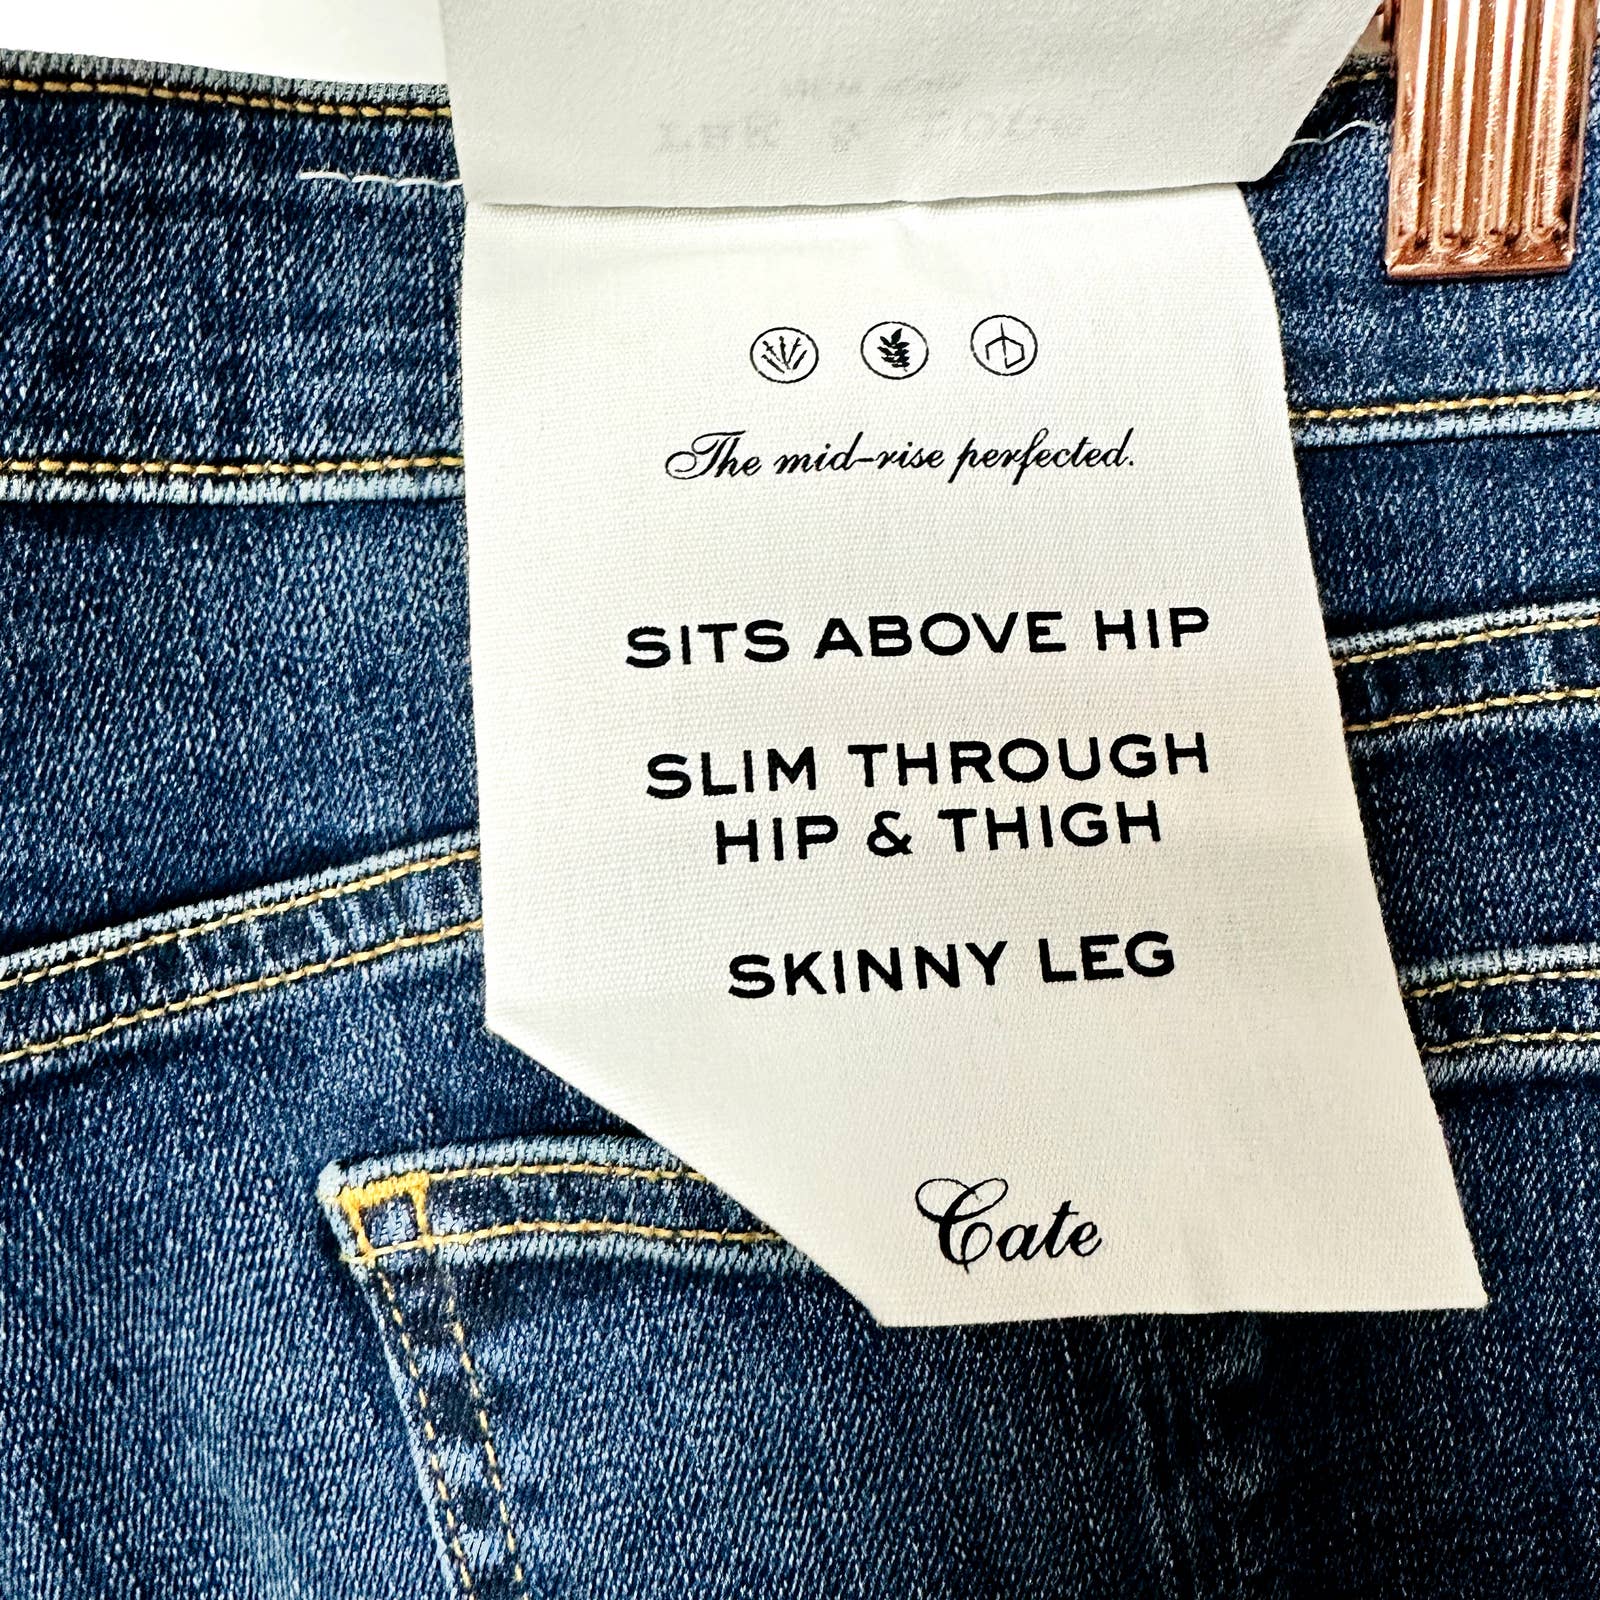 rag & bone NWT Cate Mid-Rise Skinny Slim Fit Ankle Denim Jeans Marigold Size 32